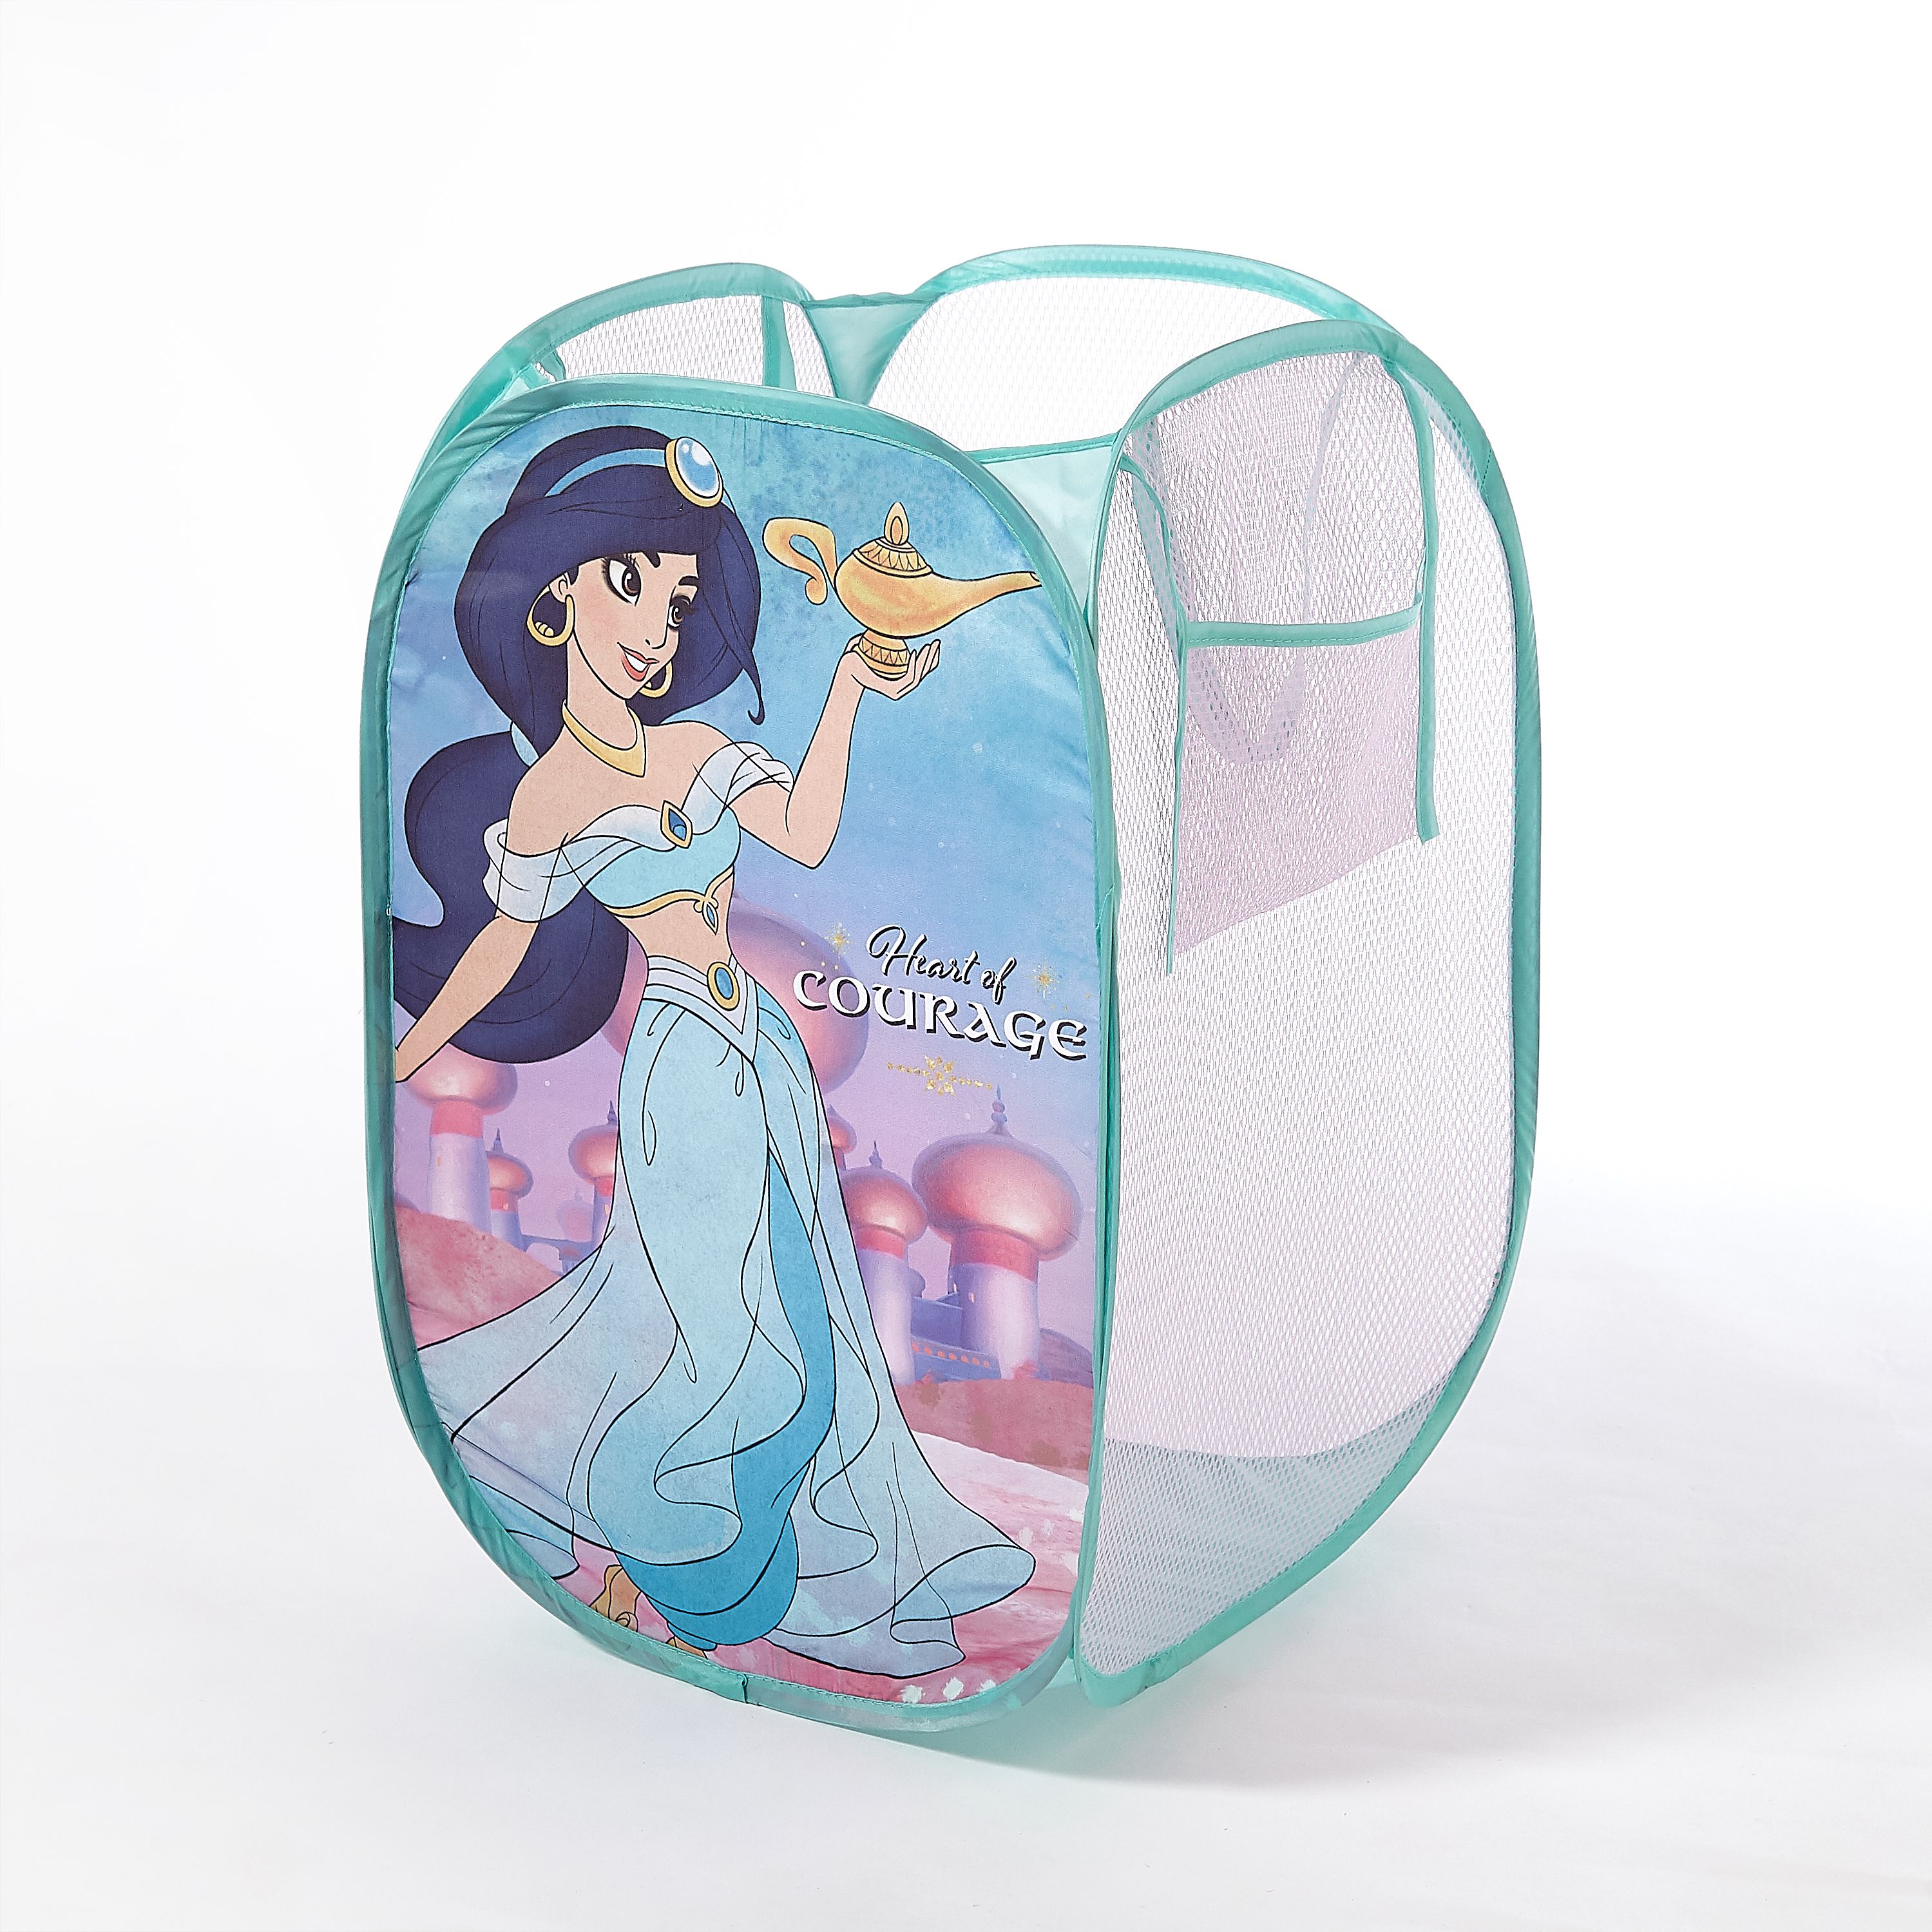 Disney Princess Jasmine Pop-Up Laundry Hampers, Multi-color - image 1 of 4